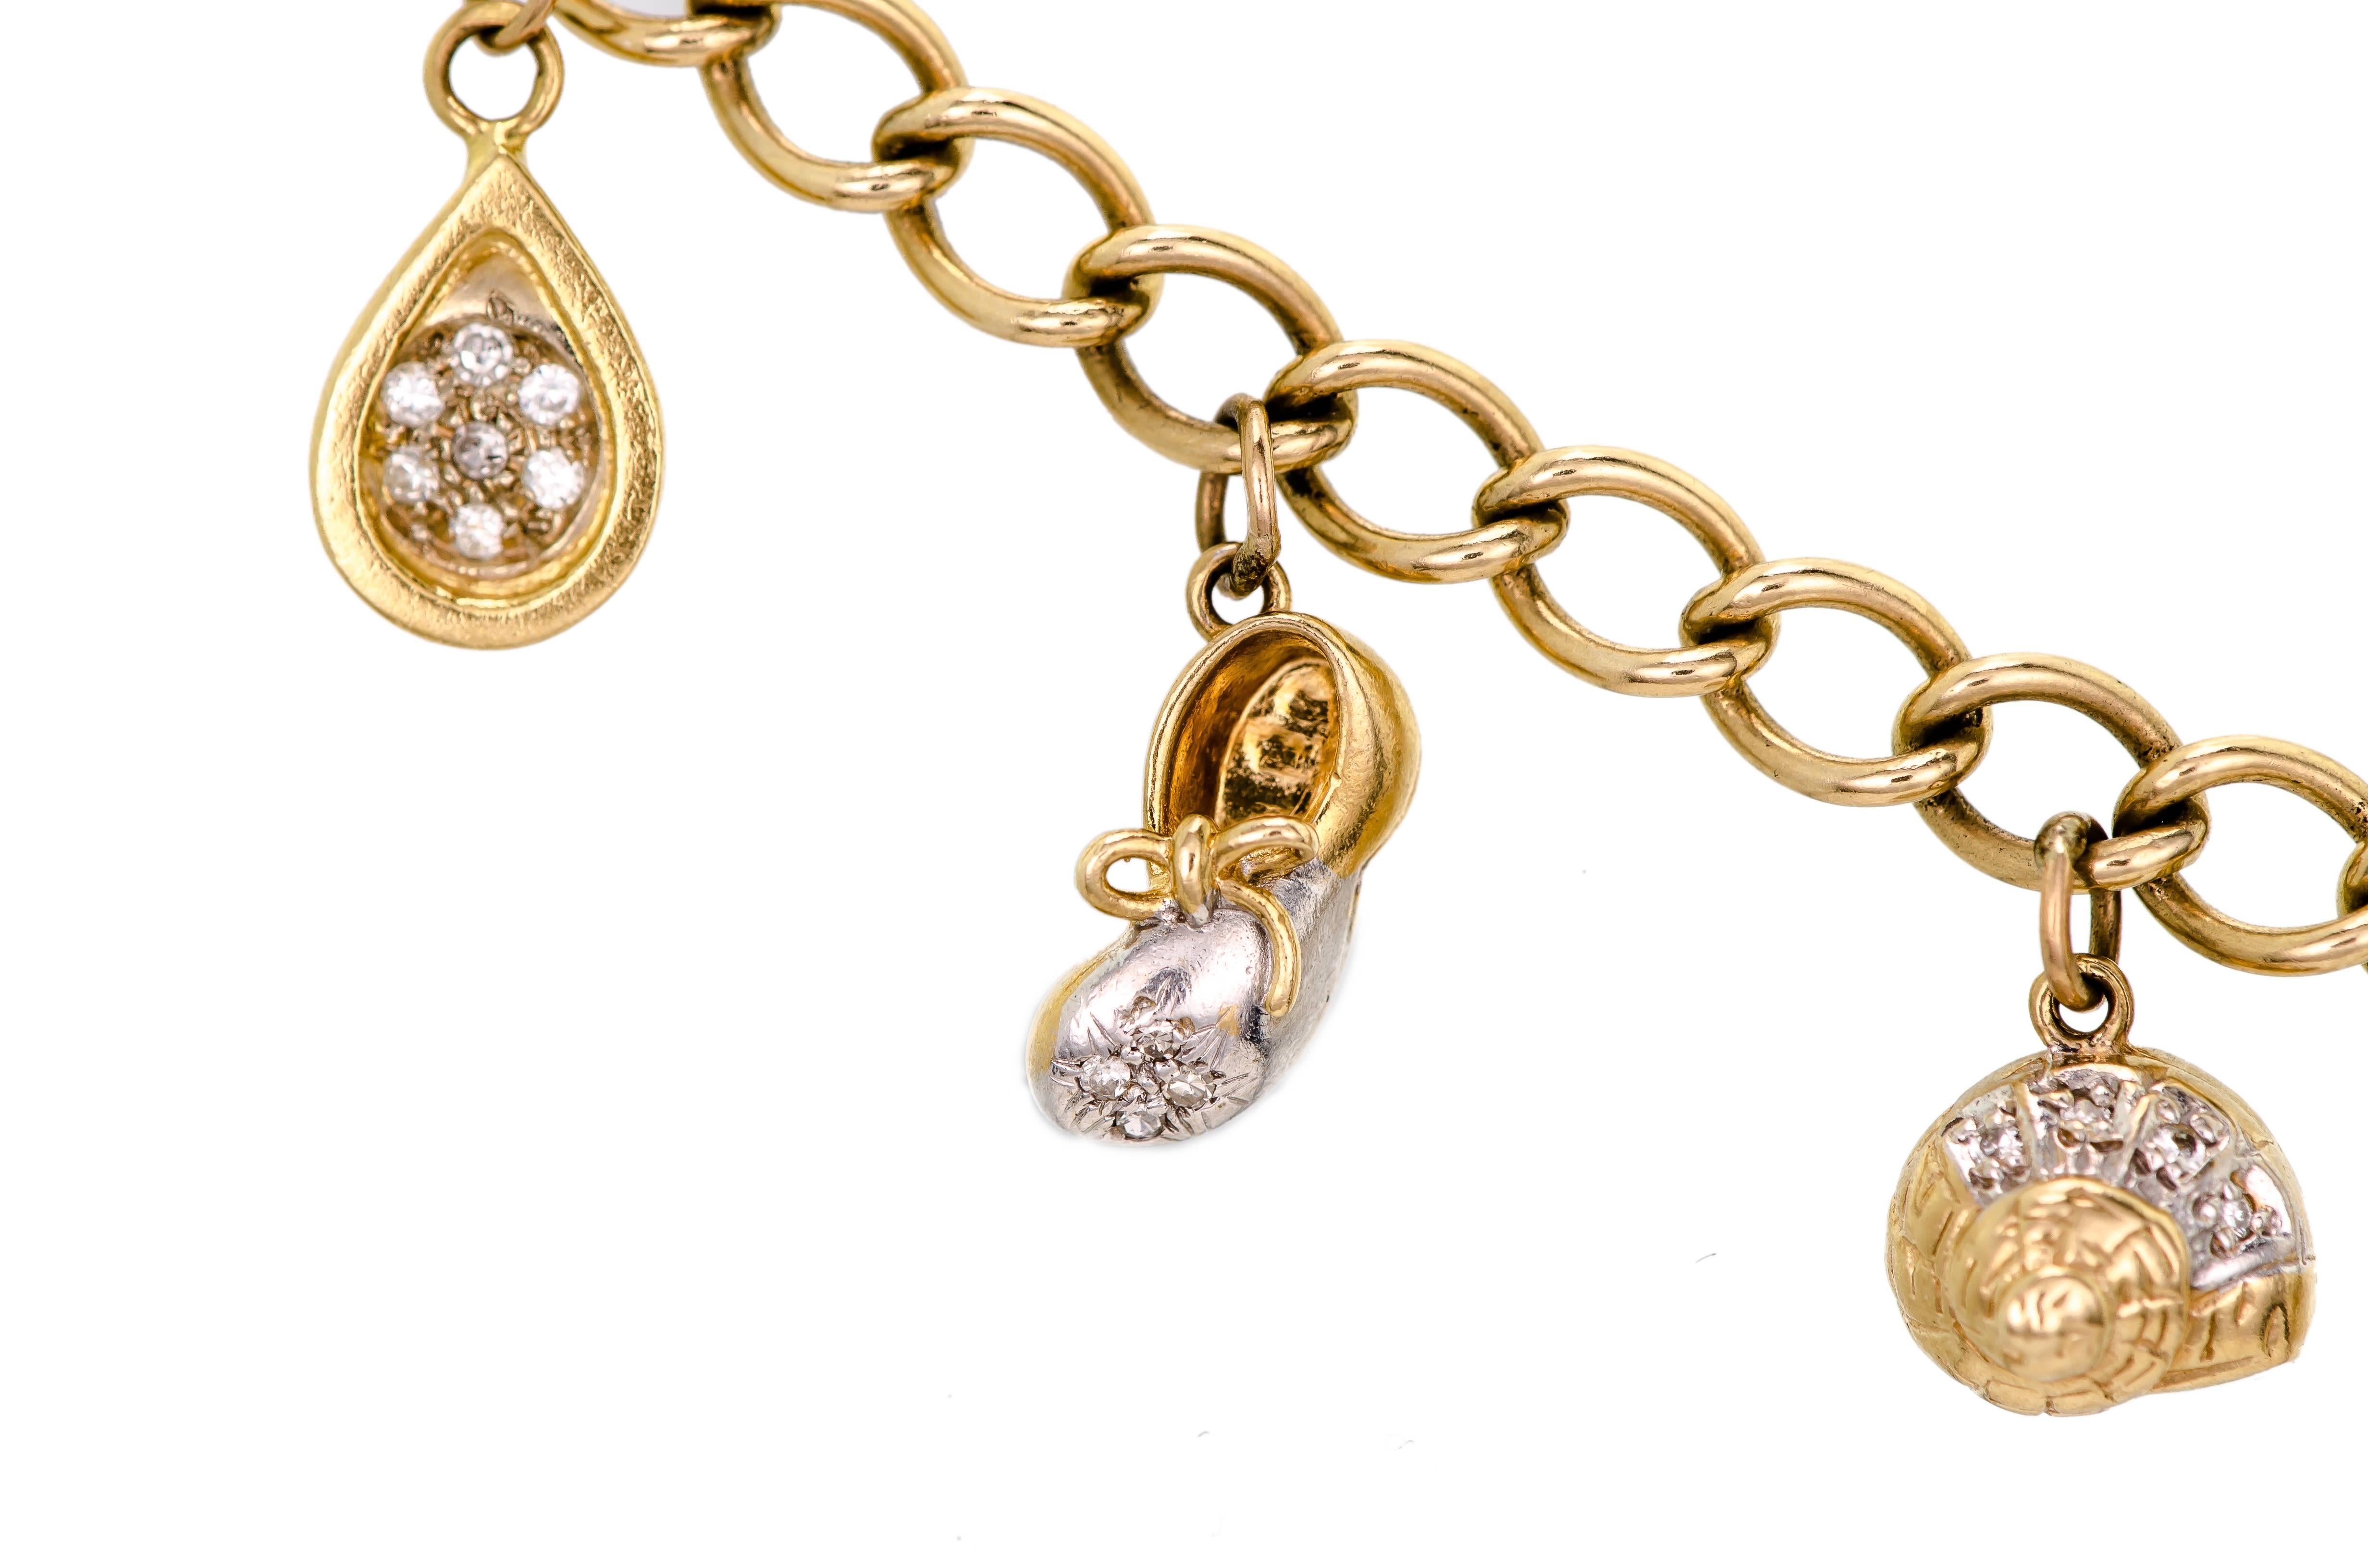 Women's Adorable 14 Karat Yellow Gold and Diamond Charm Bracelet